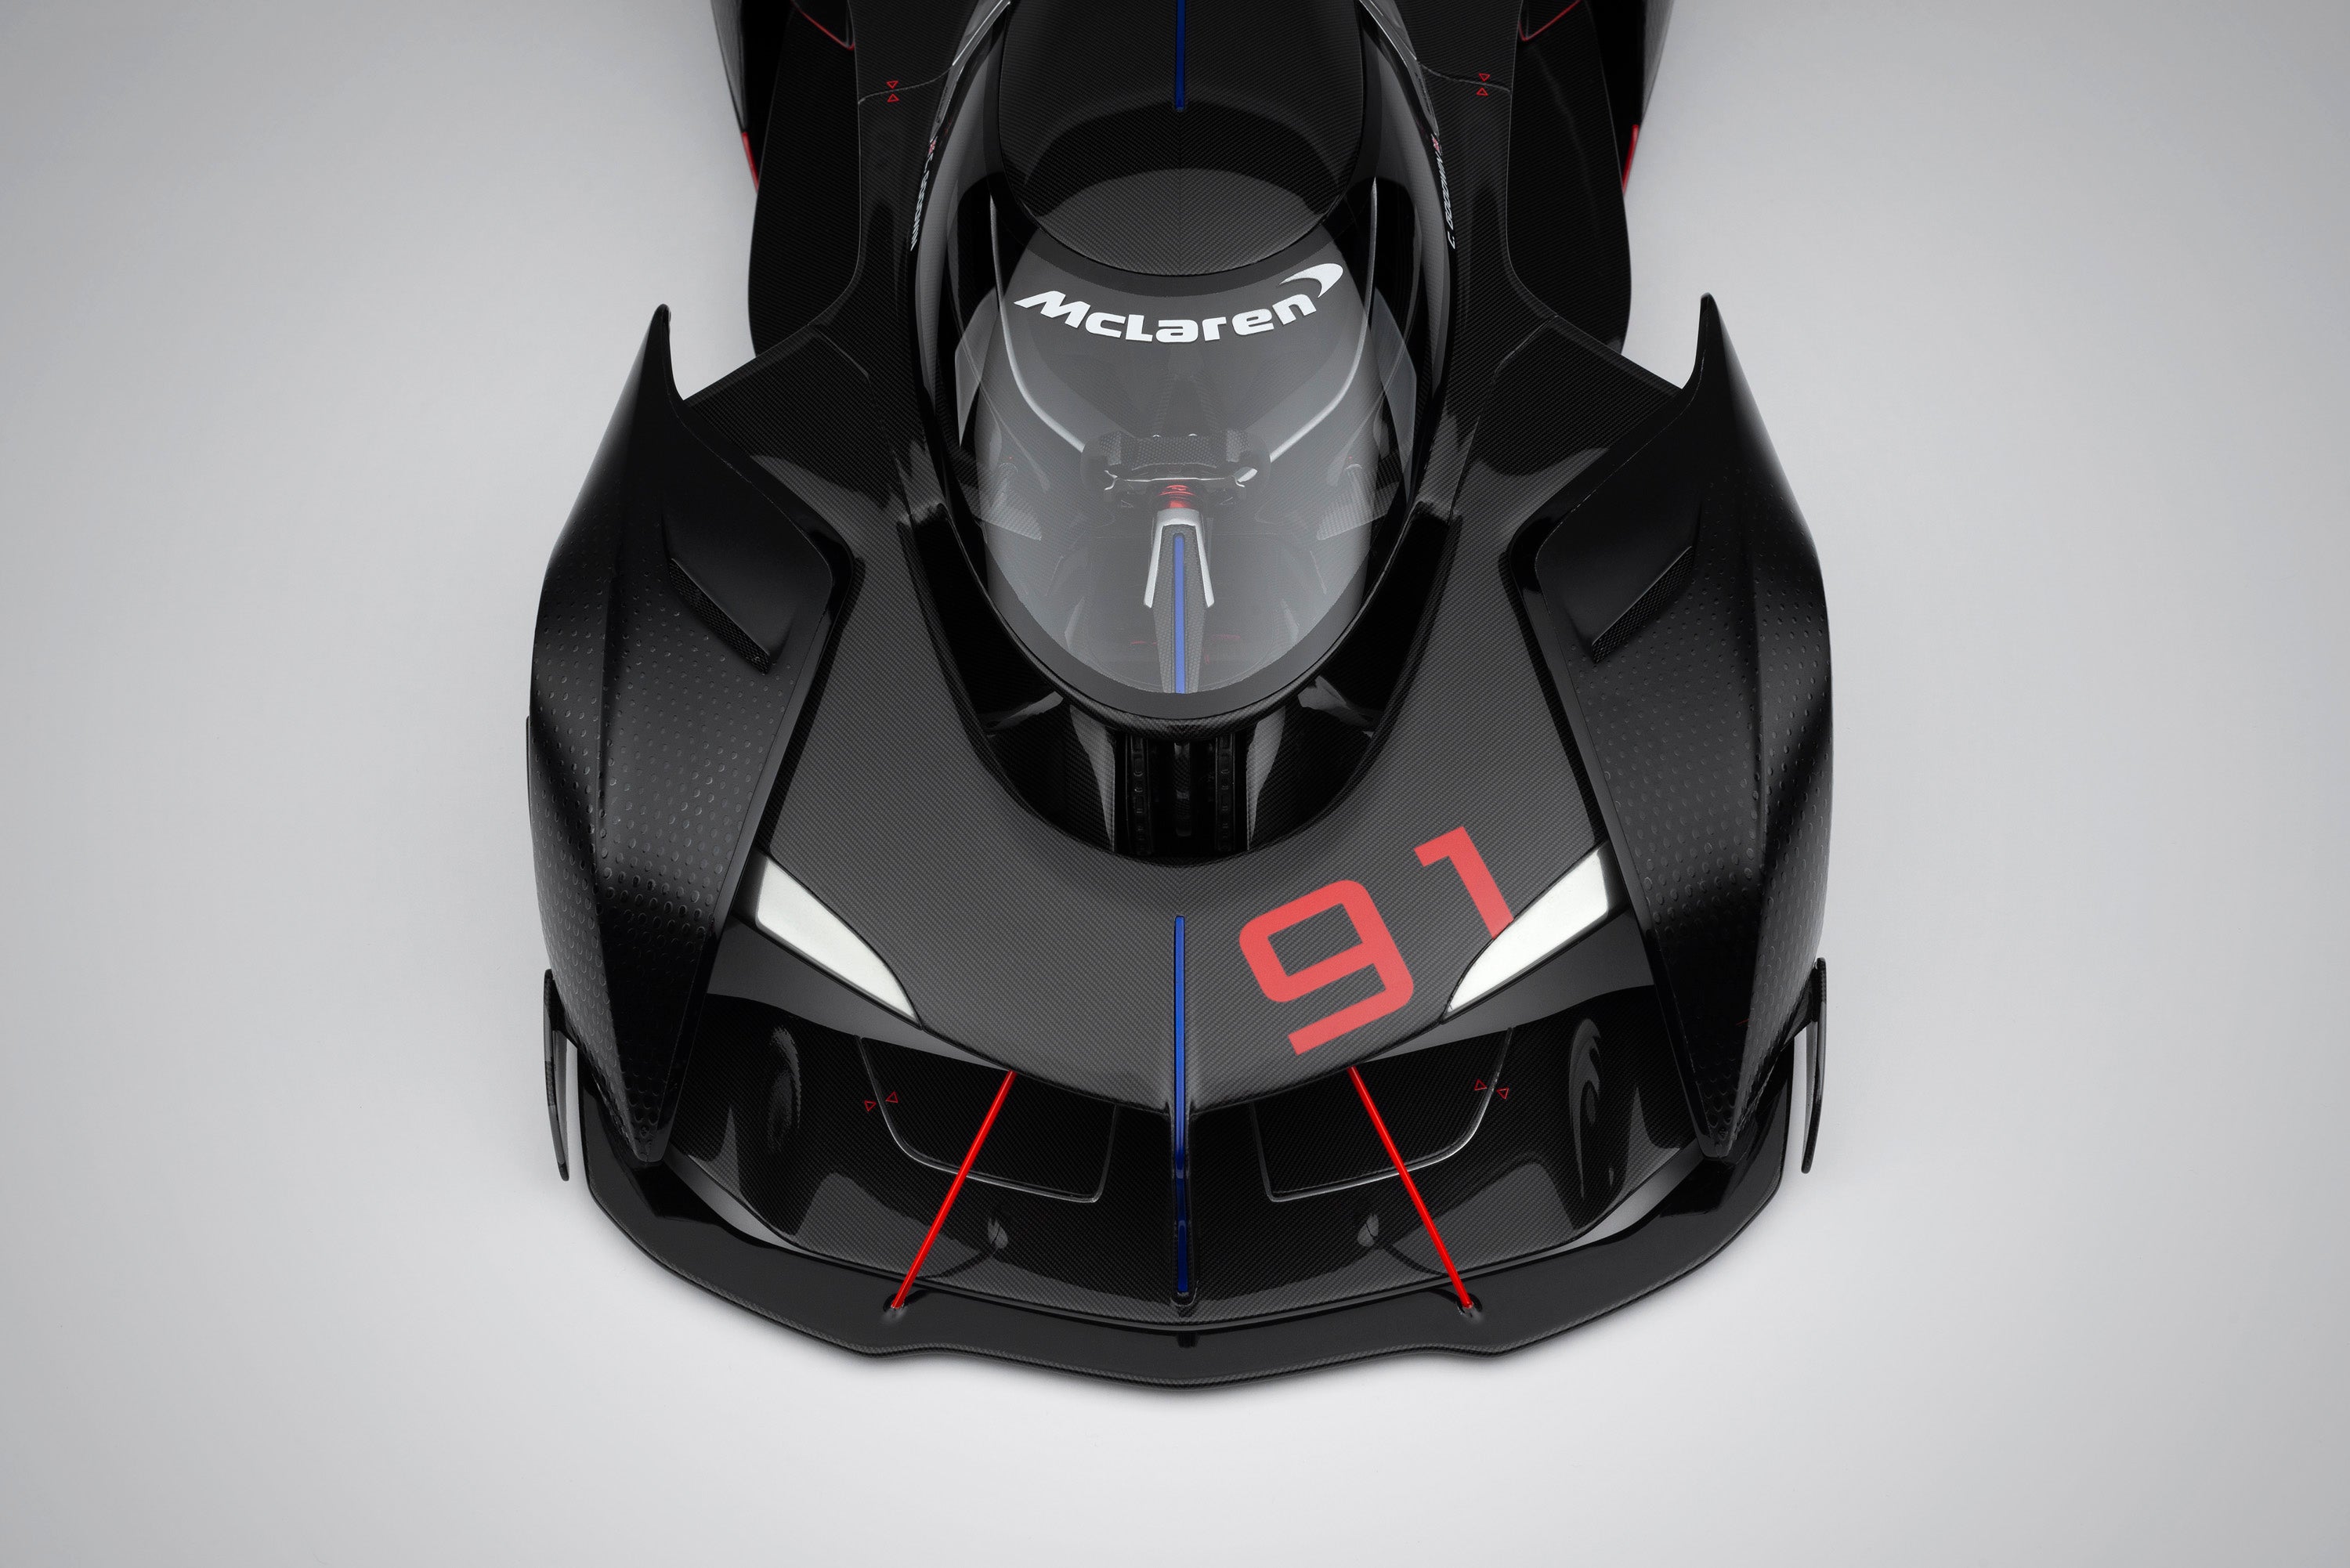 McLaren Ultimate Vision Gran Turismo - Signed Edition – Amalgam Collection